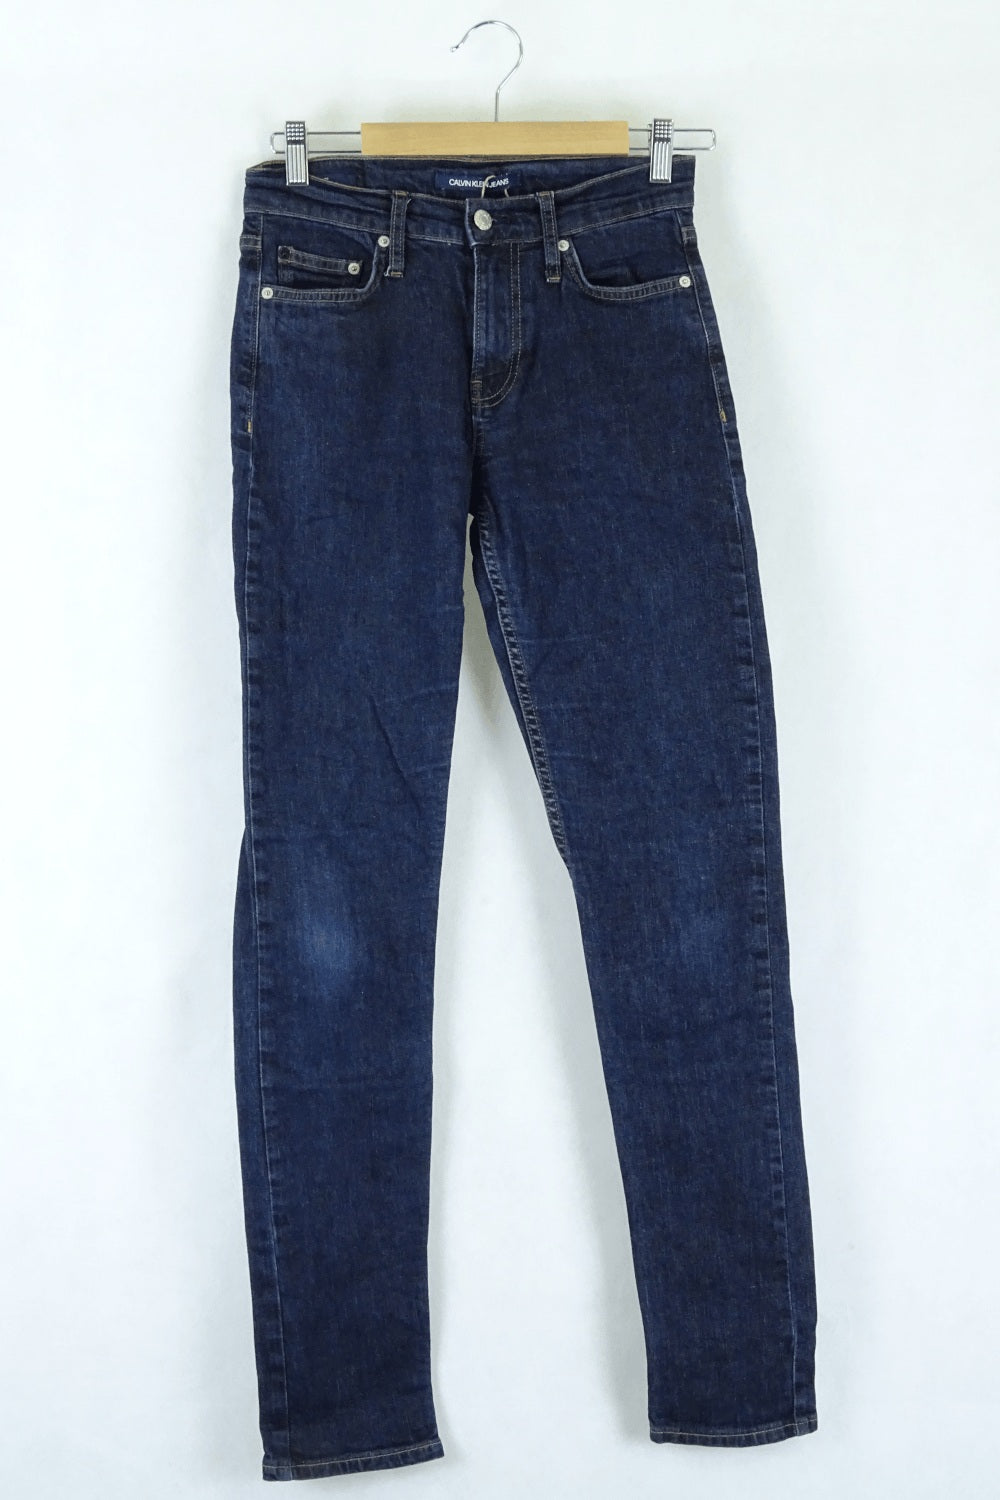 Calvin Klein Jeans 25 x 32